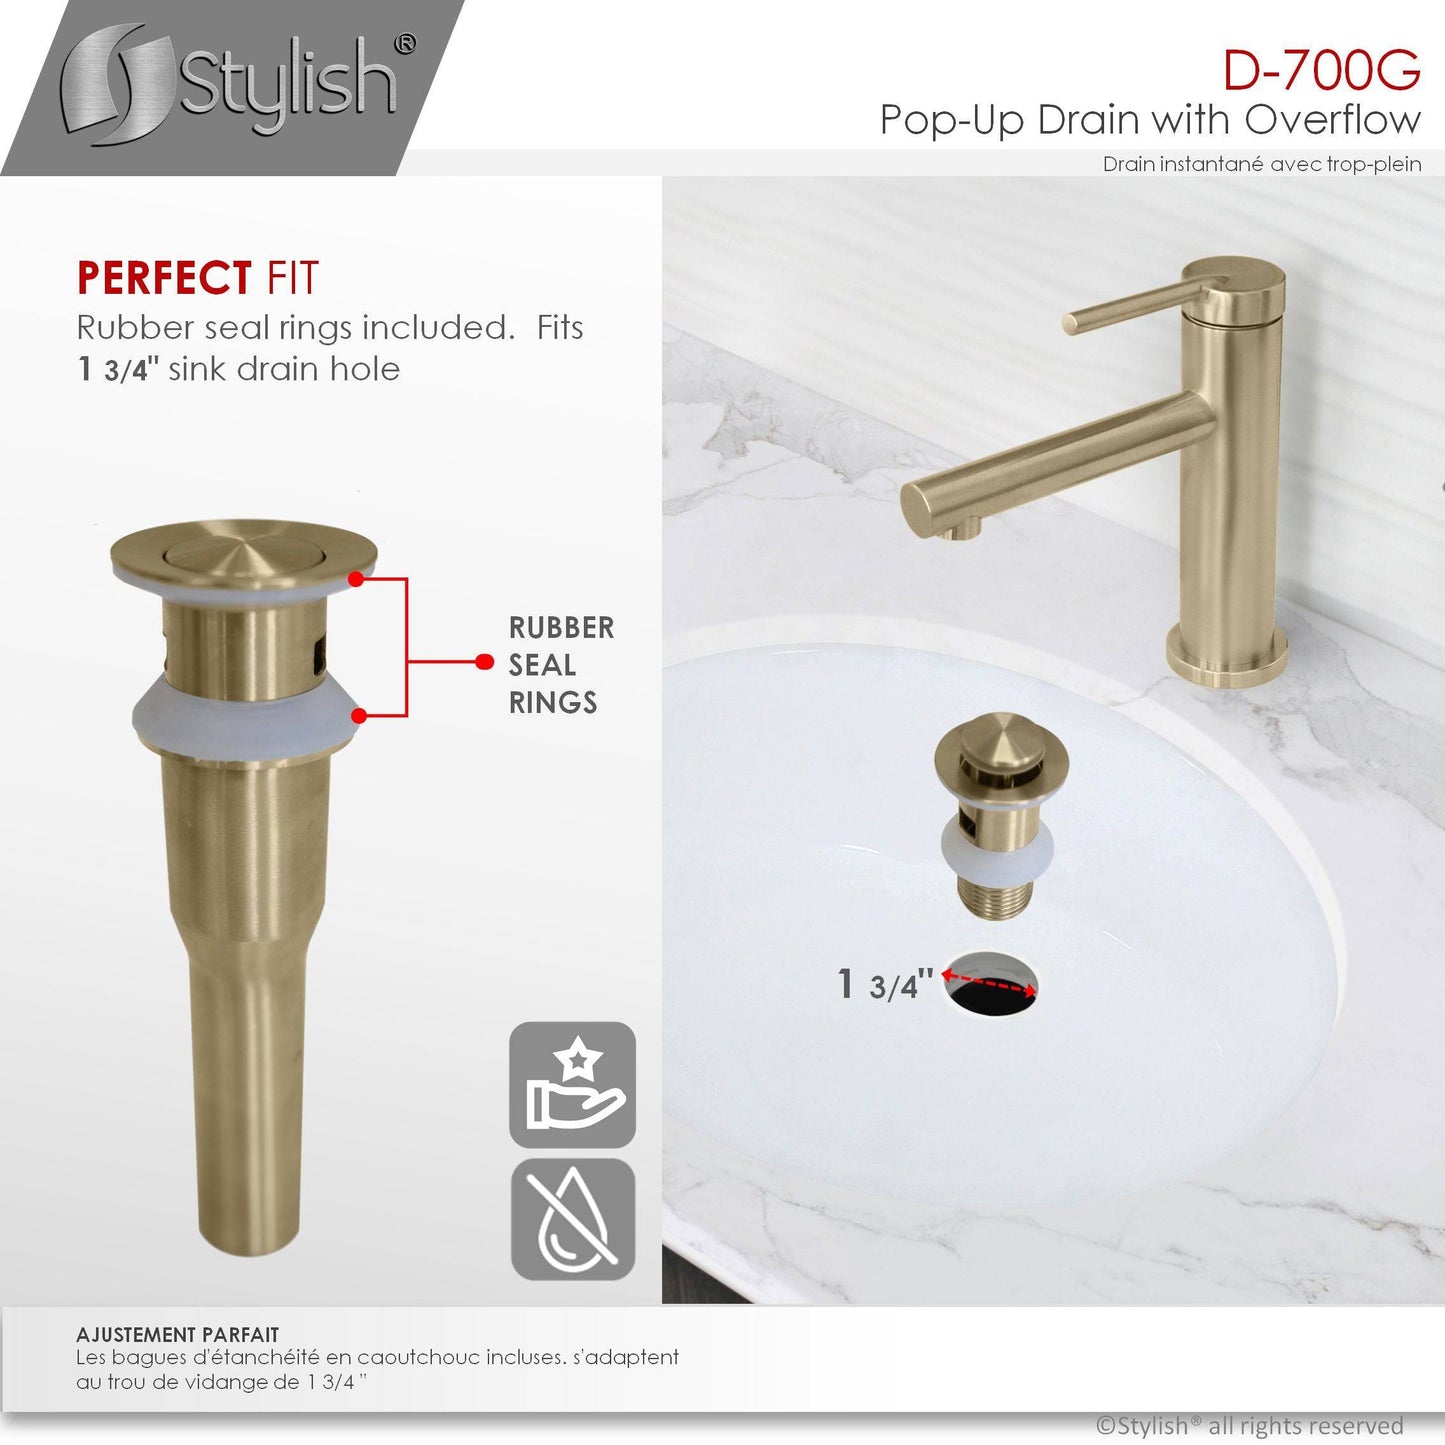 Stylish Stainless Steel Bathroom Sink Pop-Up Drain with Overflow D-700G - Renoz